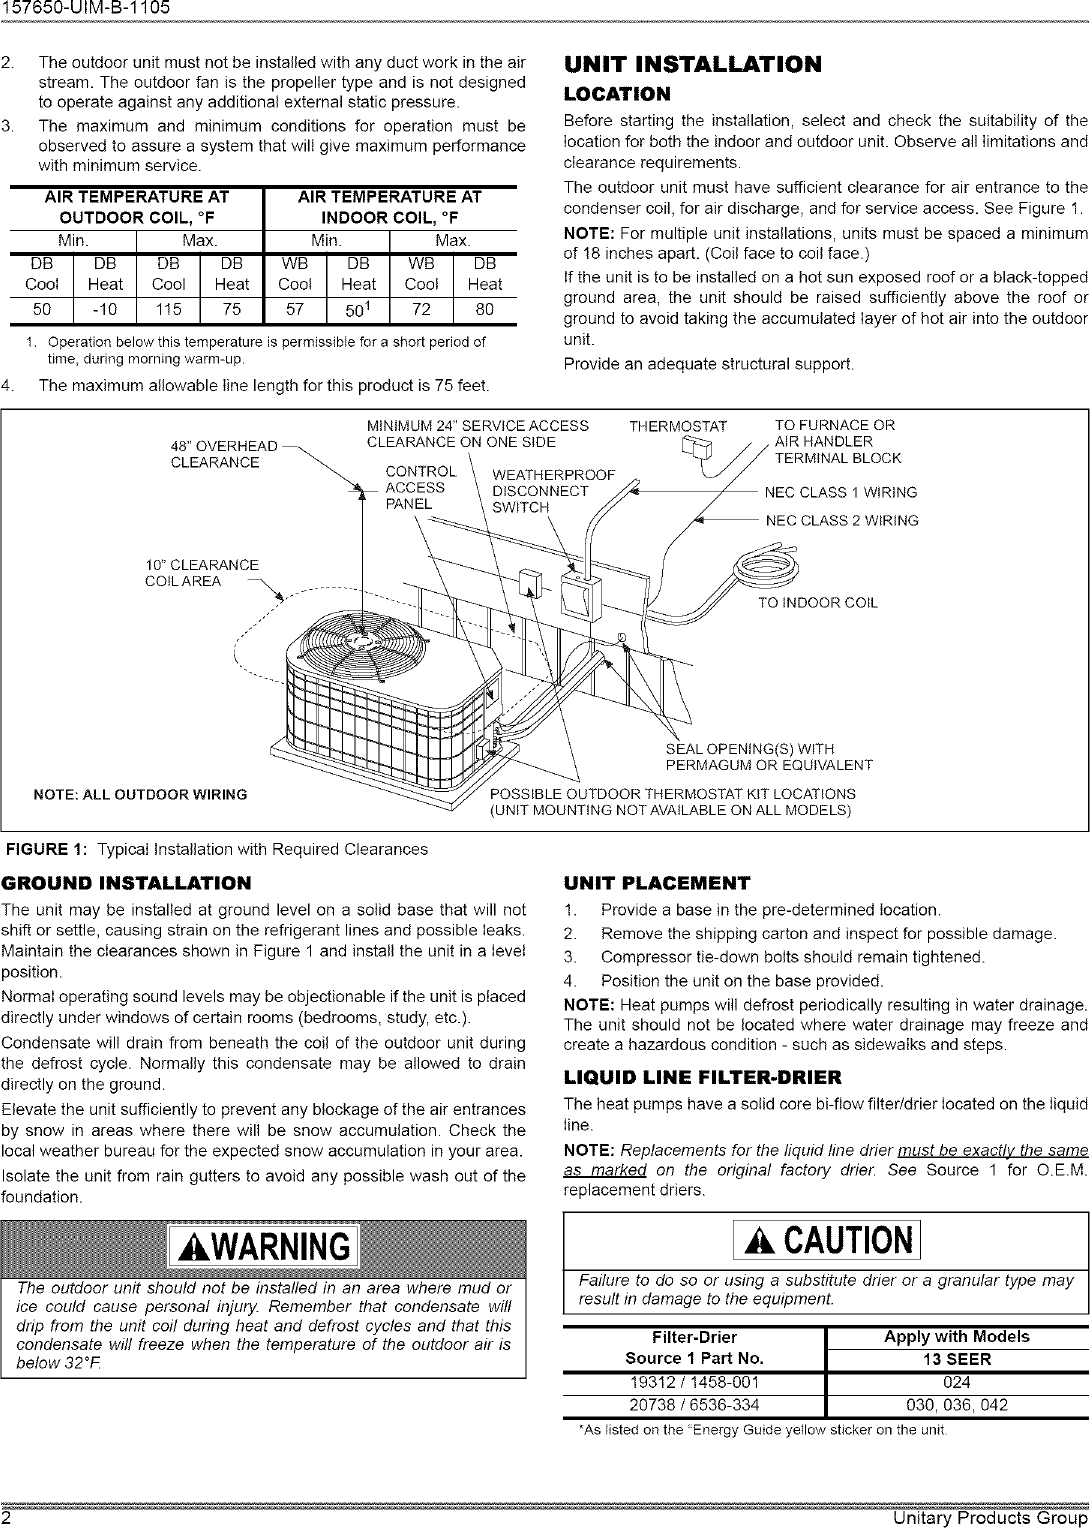 samsung heat pump user manual